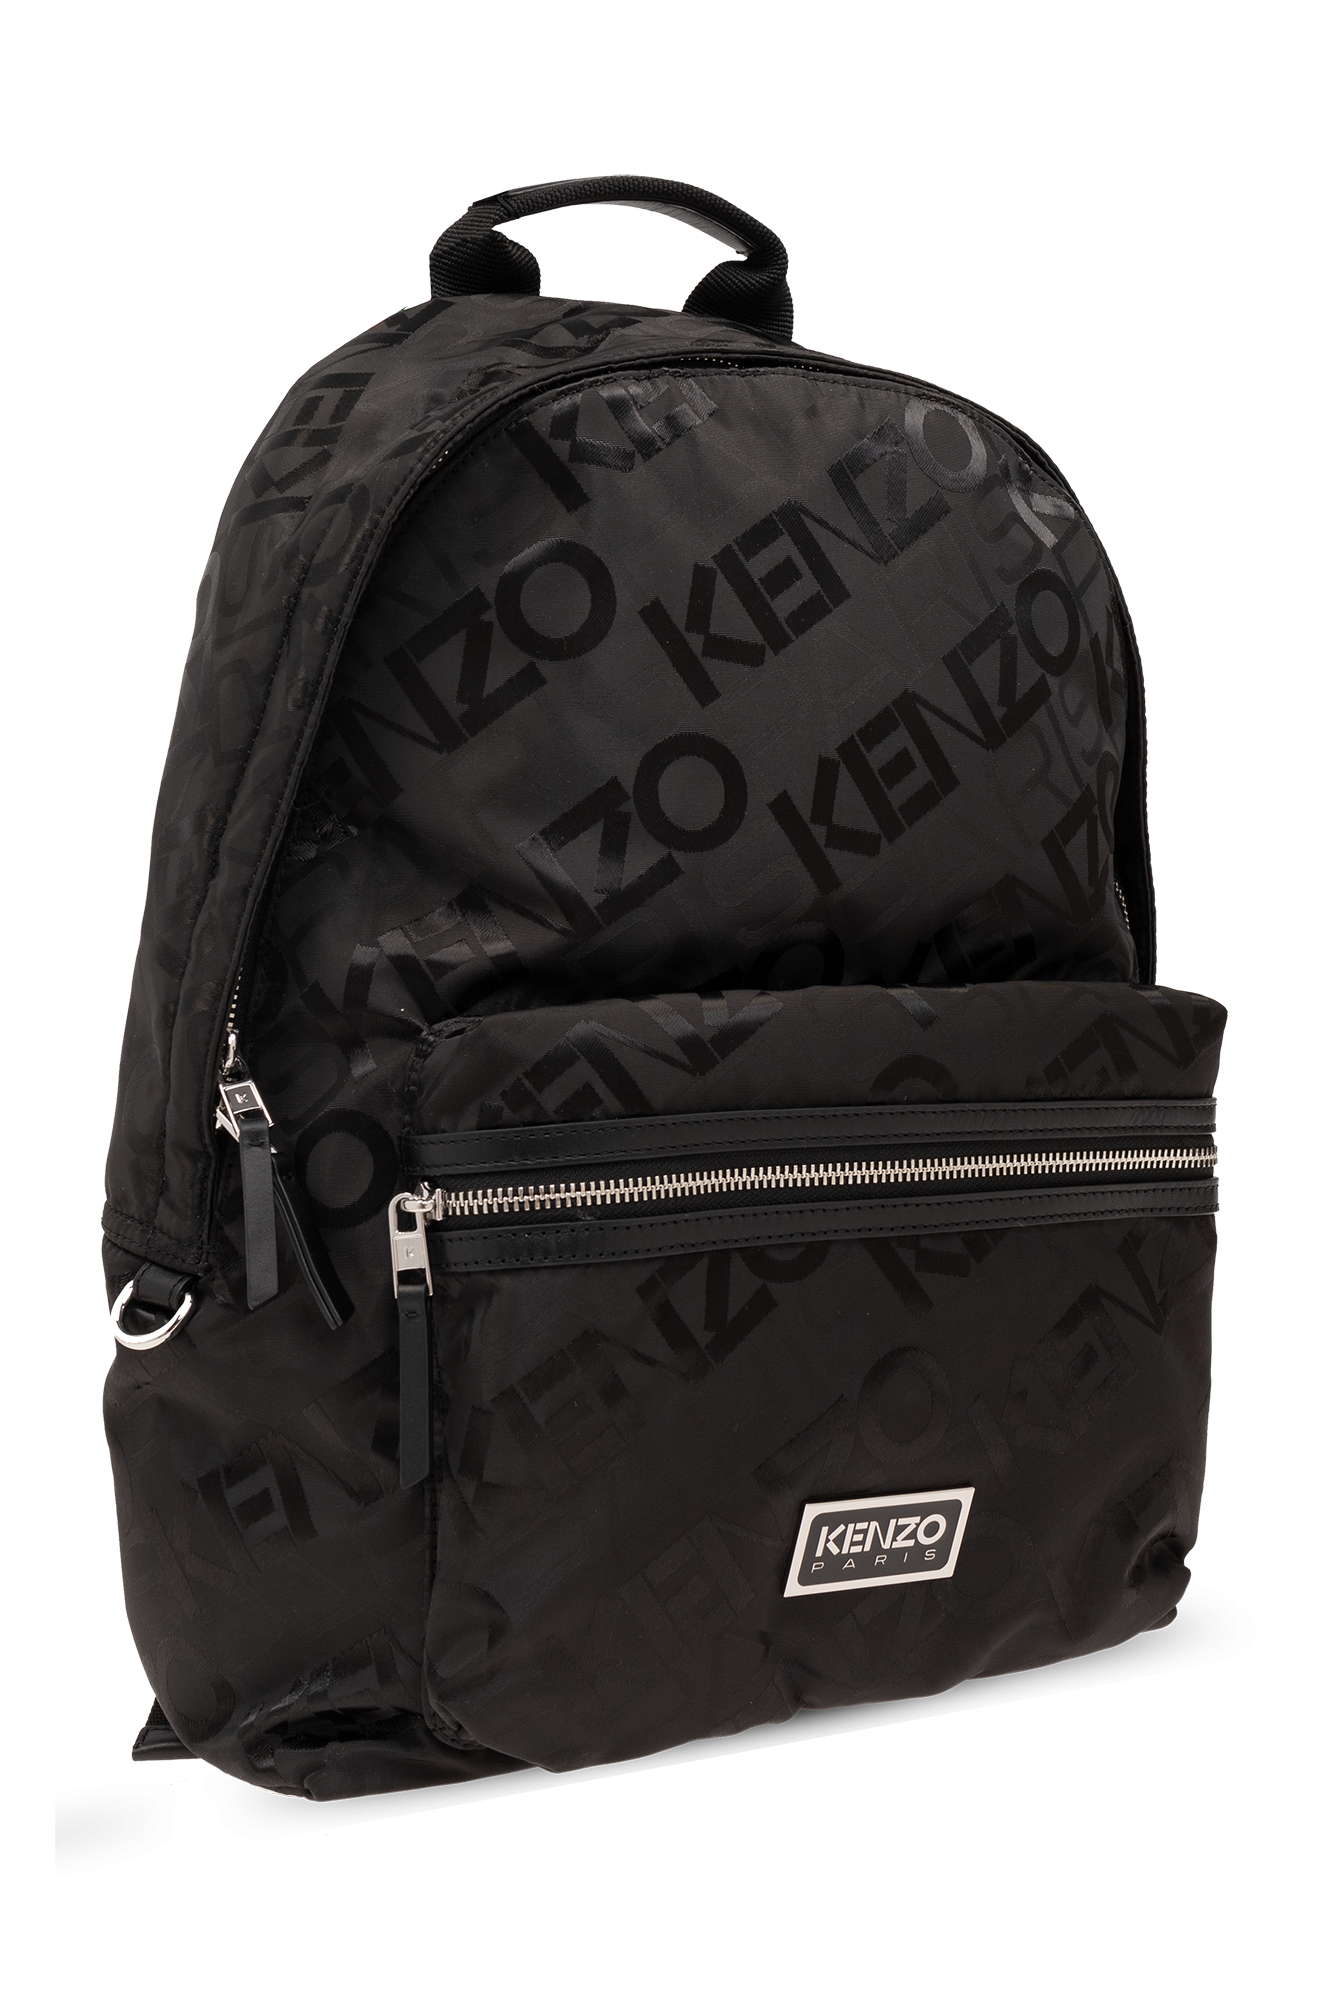 Kenzo ‘Kenzo Paris’ backpack